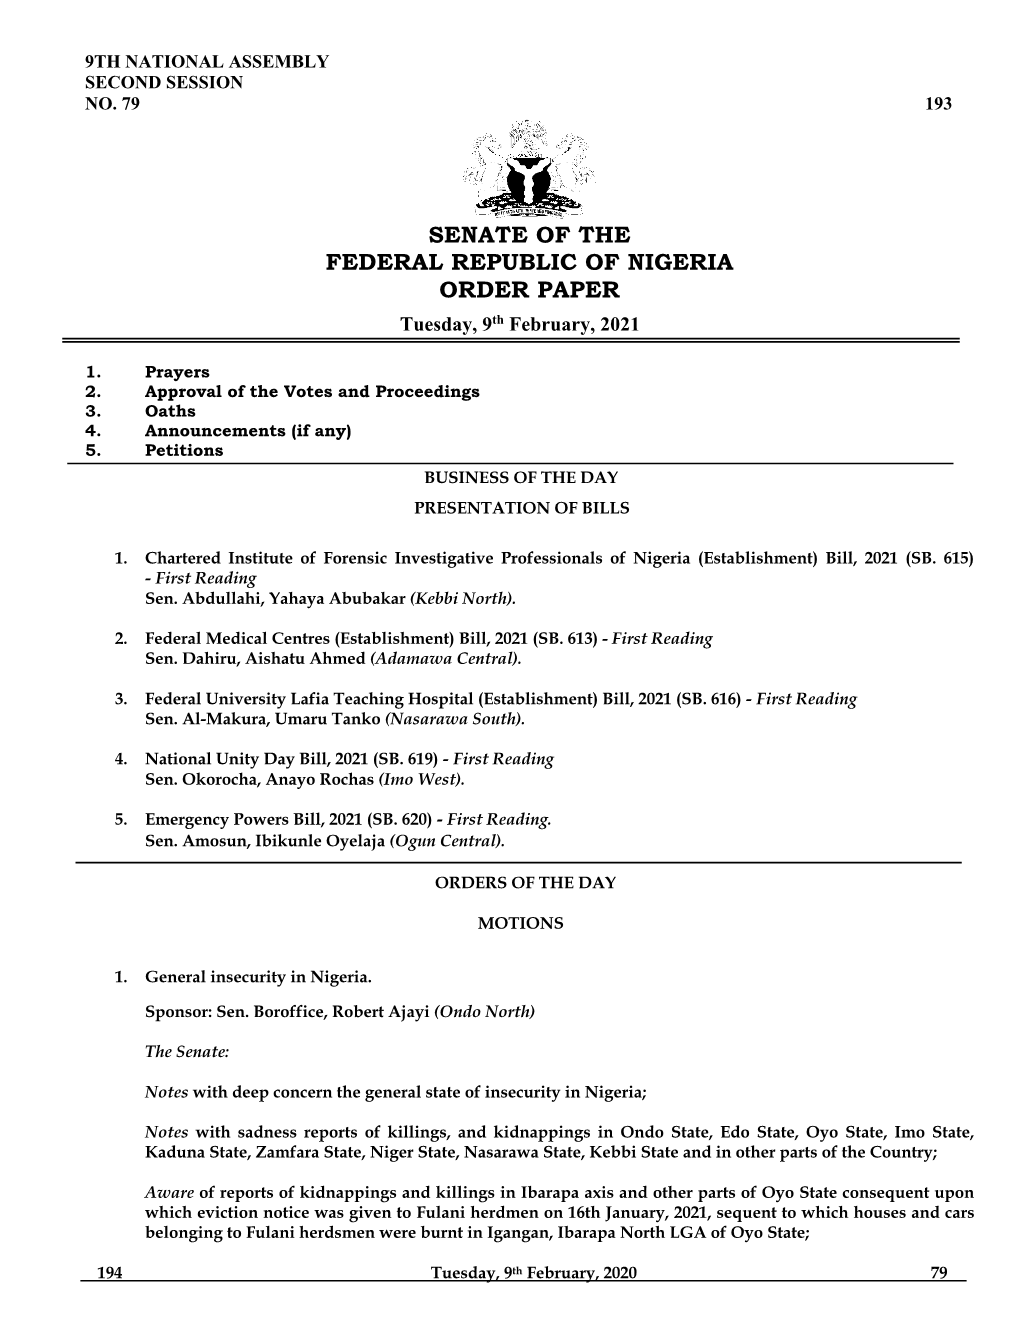 Senate Order Paper Tuesday, 9Th February, 2021